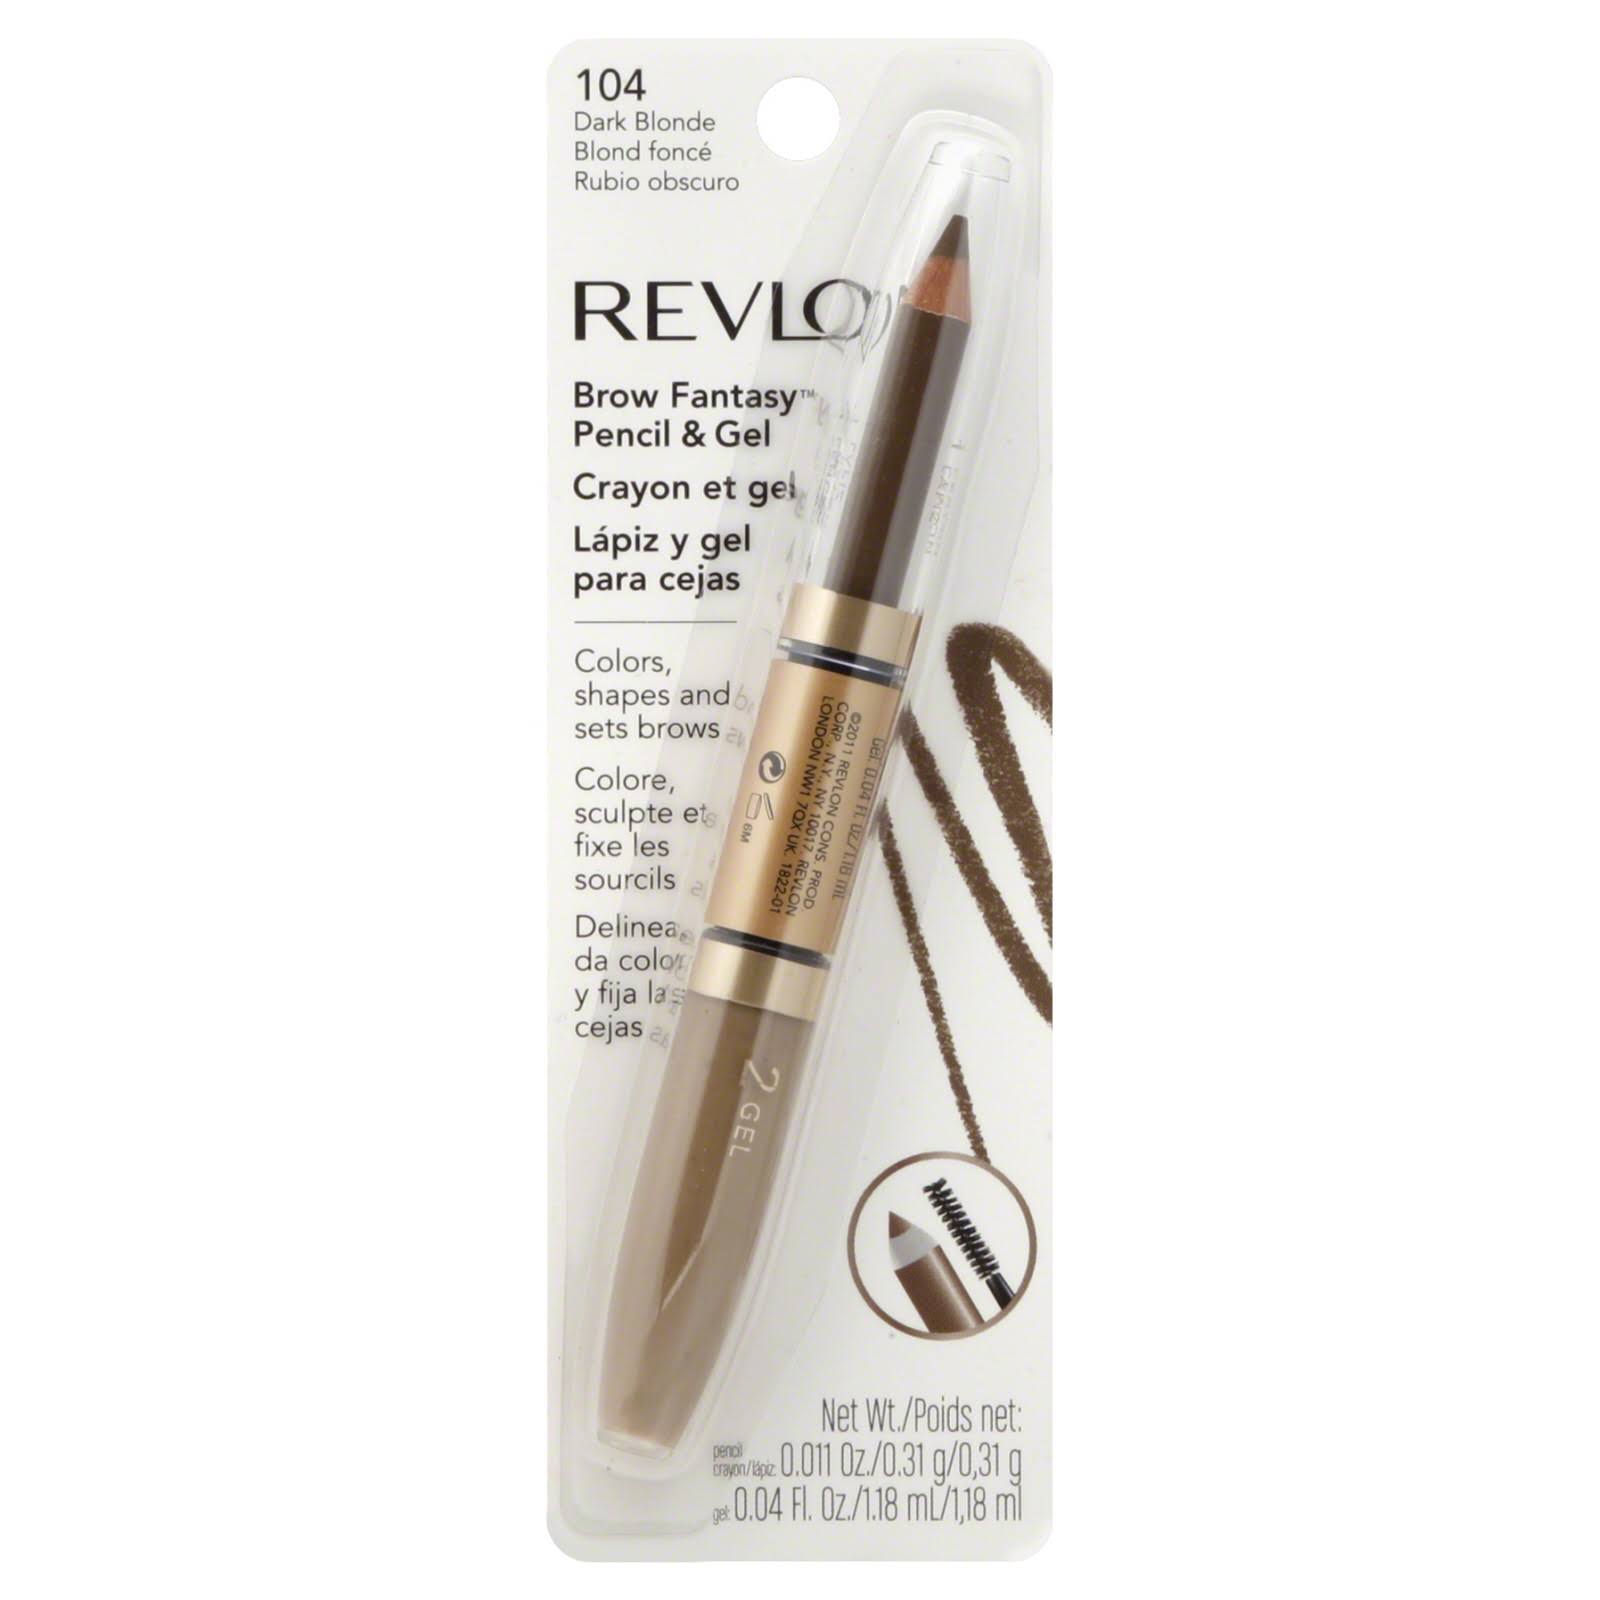 Revlon Brow Fantasy Pencil & Gel - 104 Dark Blonde